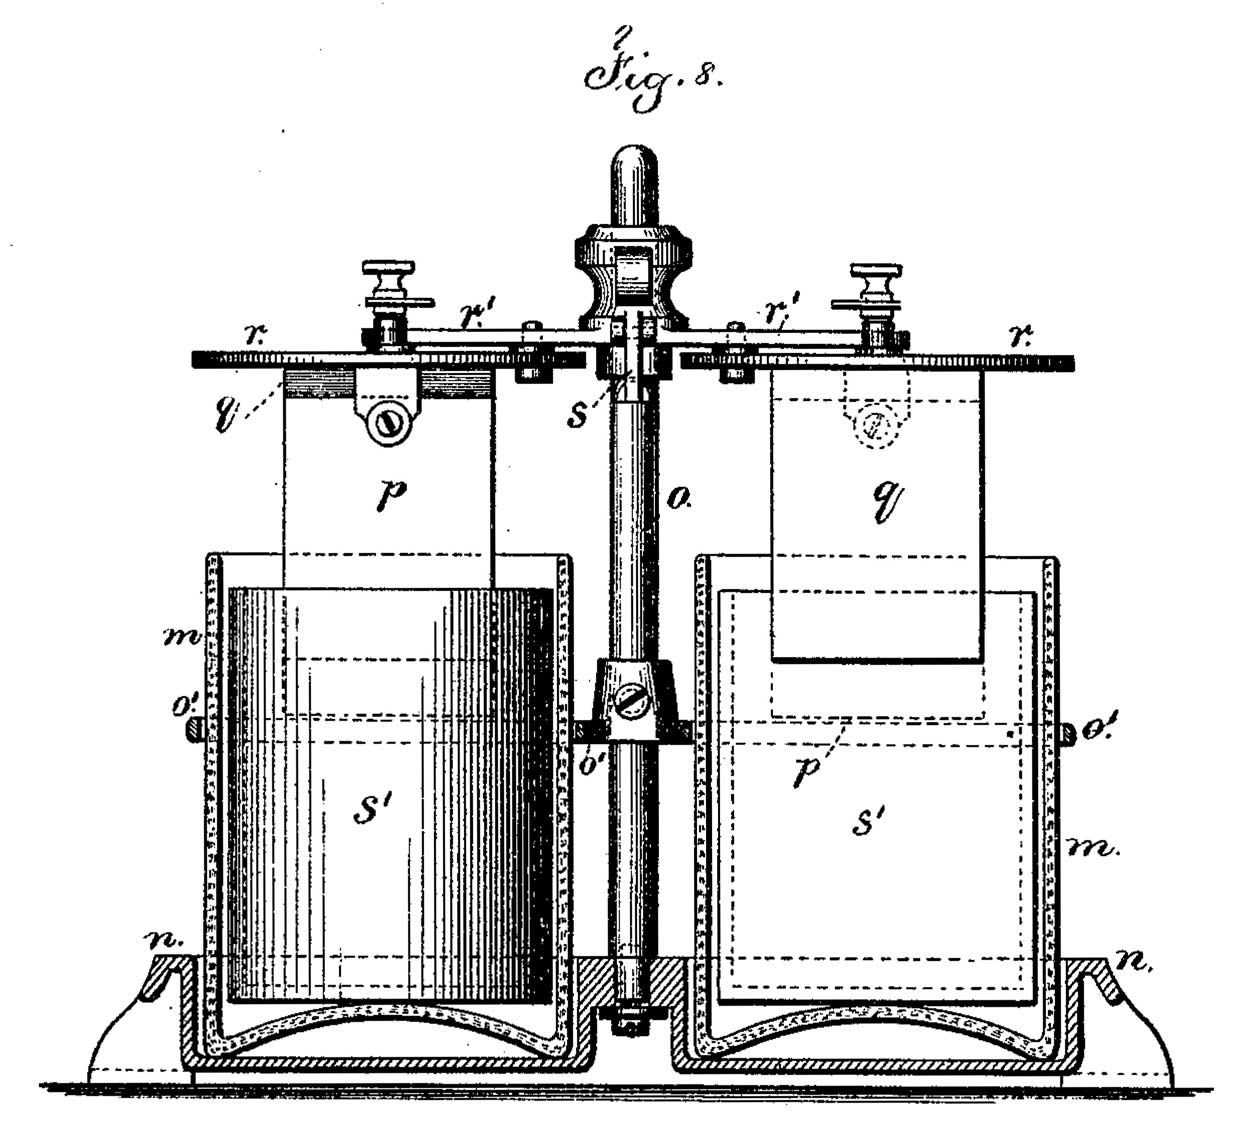 rare edison electric pen - pat. aug 8 1876